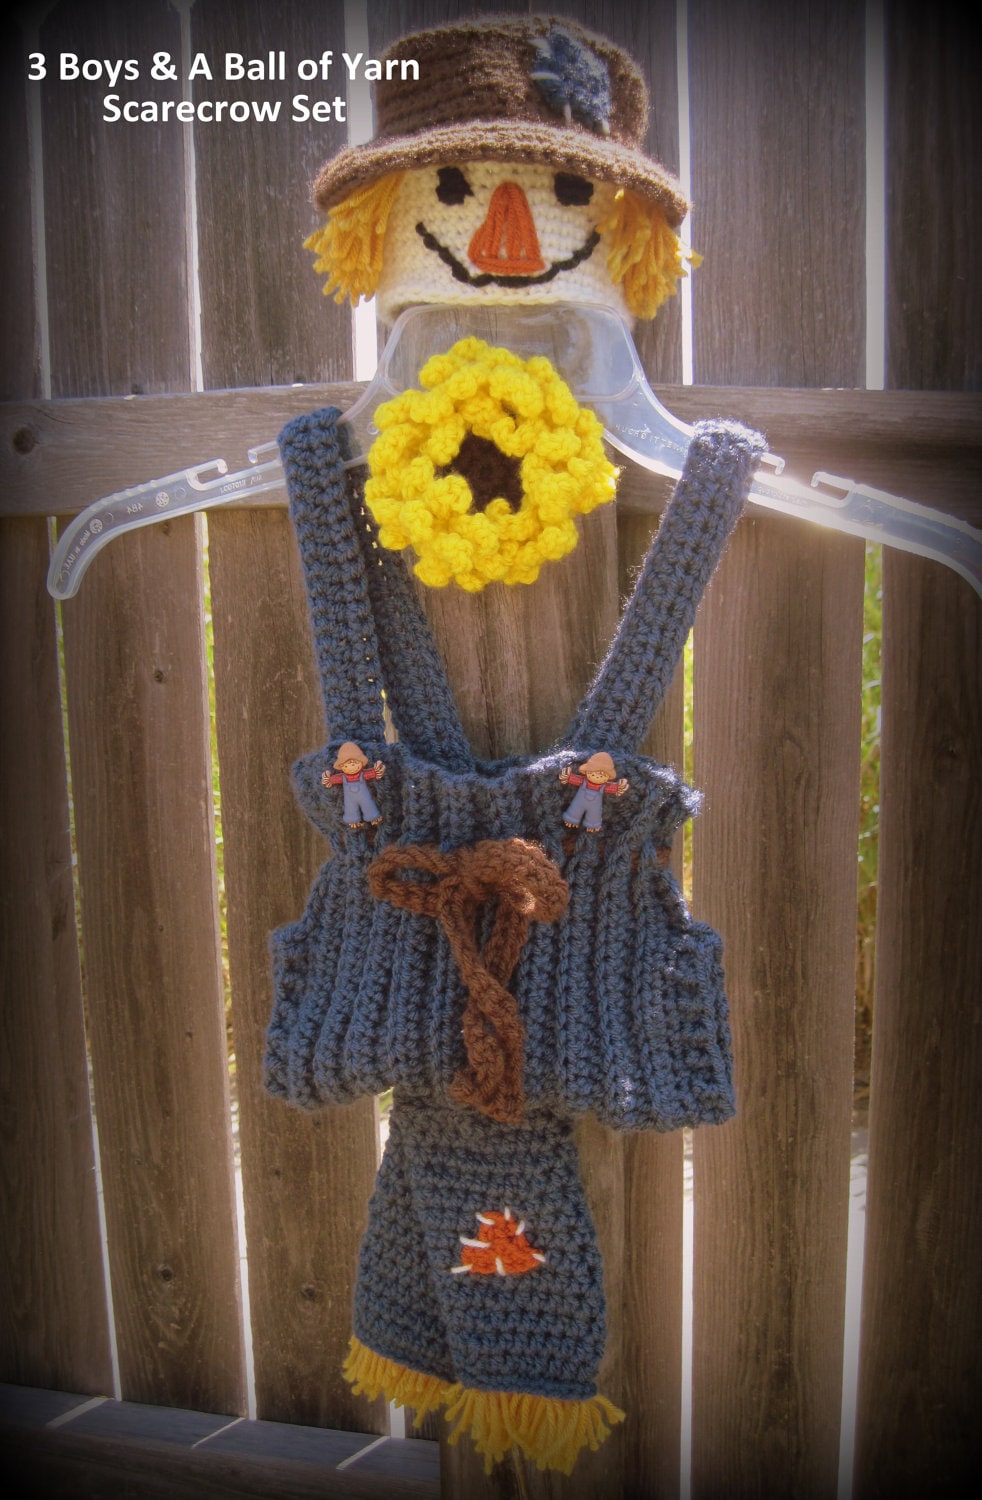 Scarecrow Crochet Pattern Set by 3BoysAndABallOfYarn on Etsy